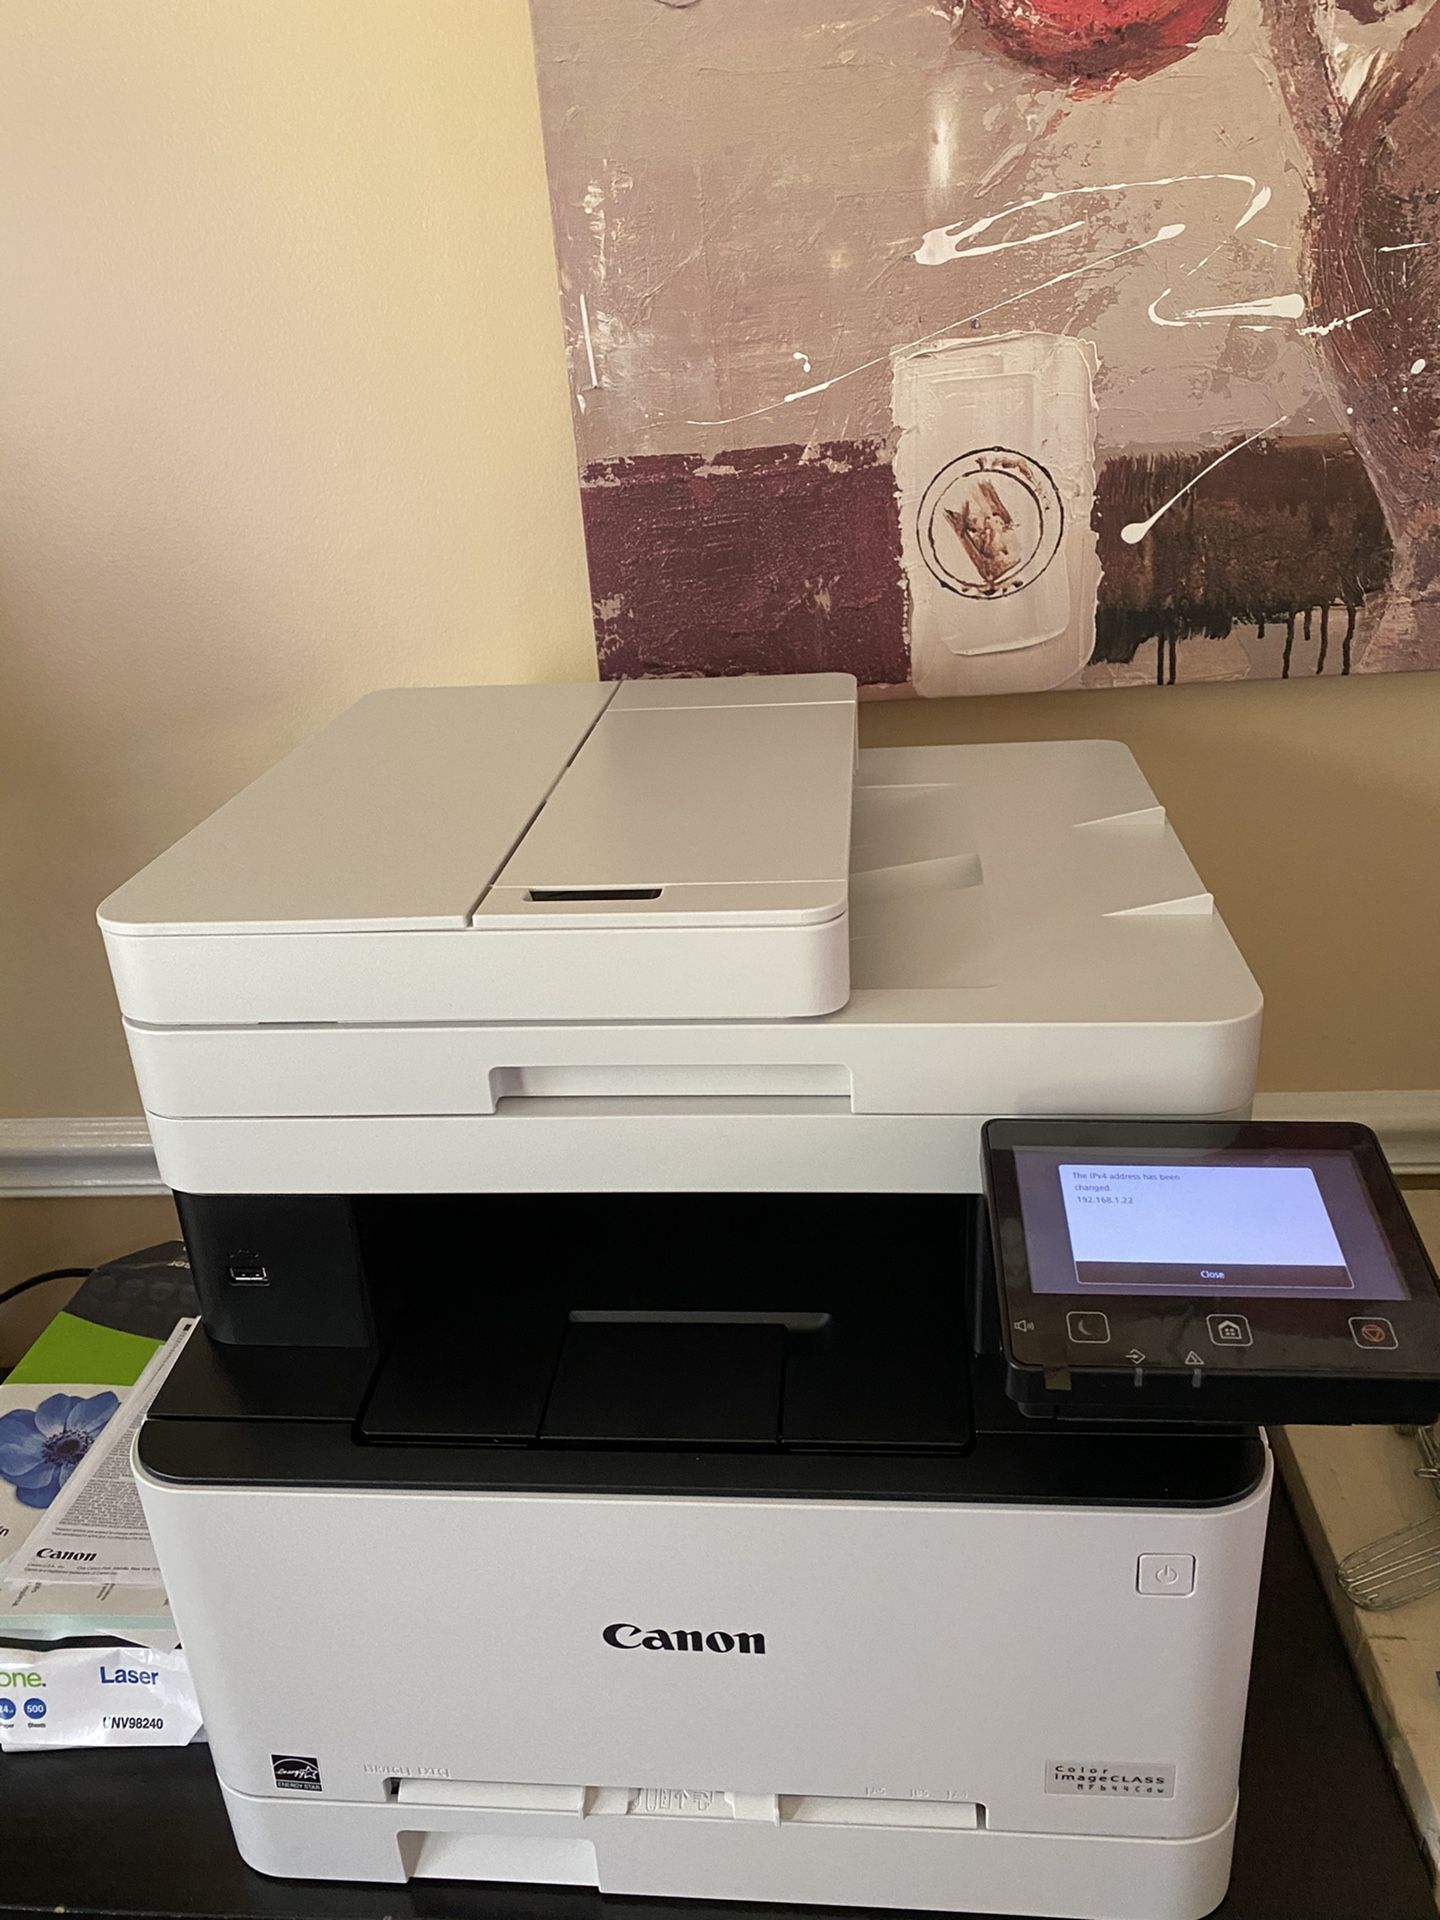 Canon image class laser printer